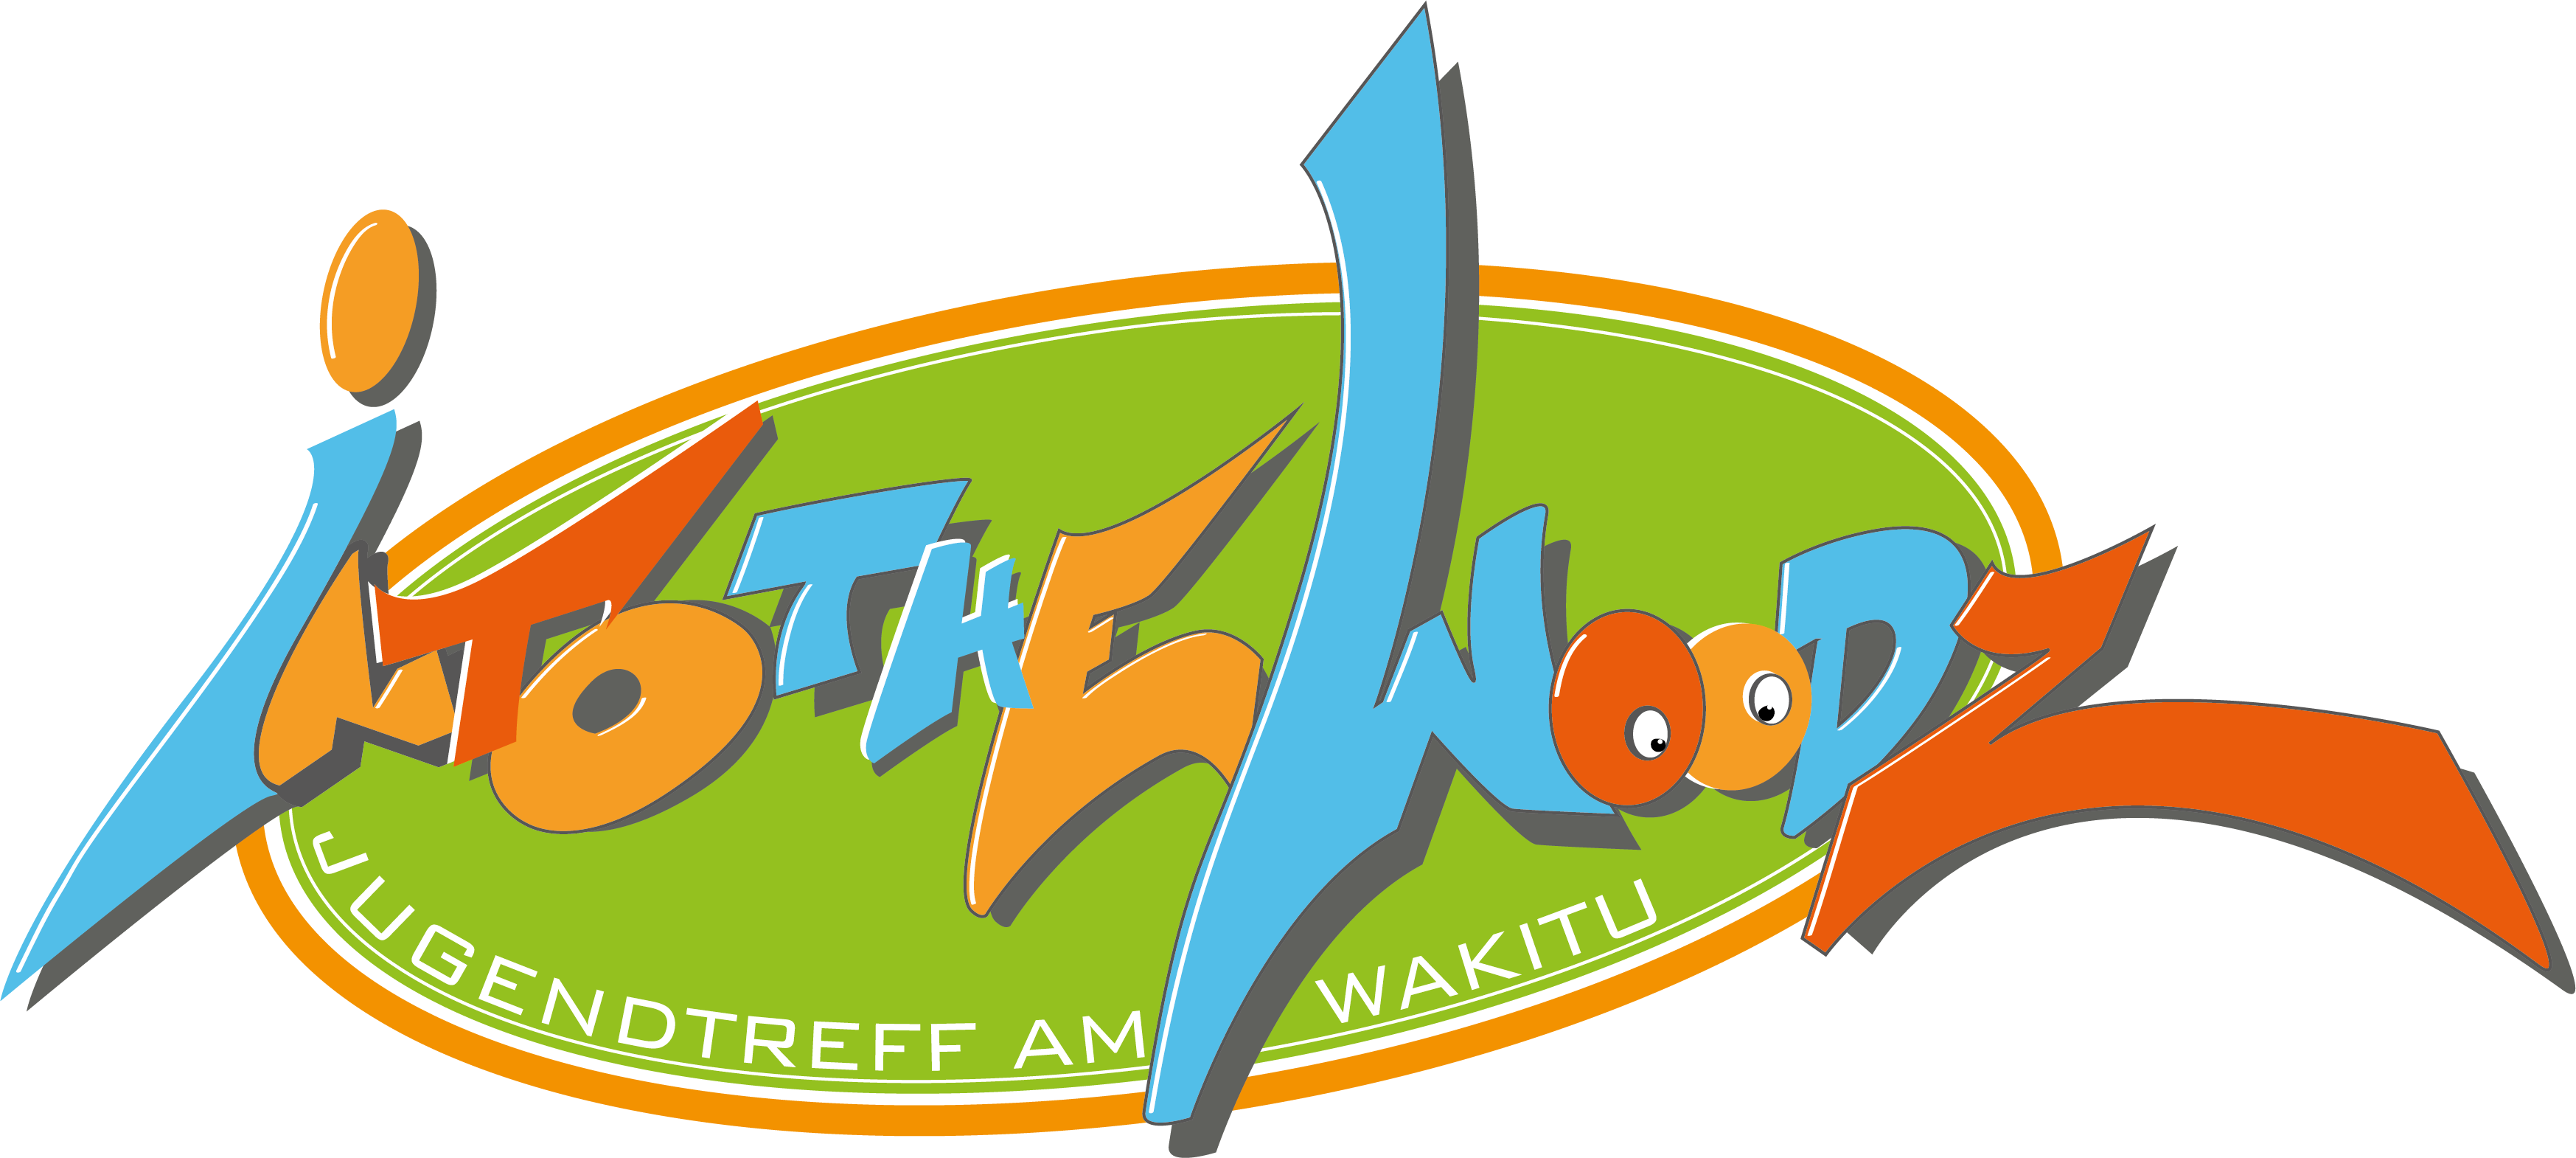 Into the woodz - Logo